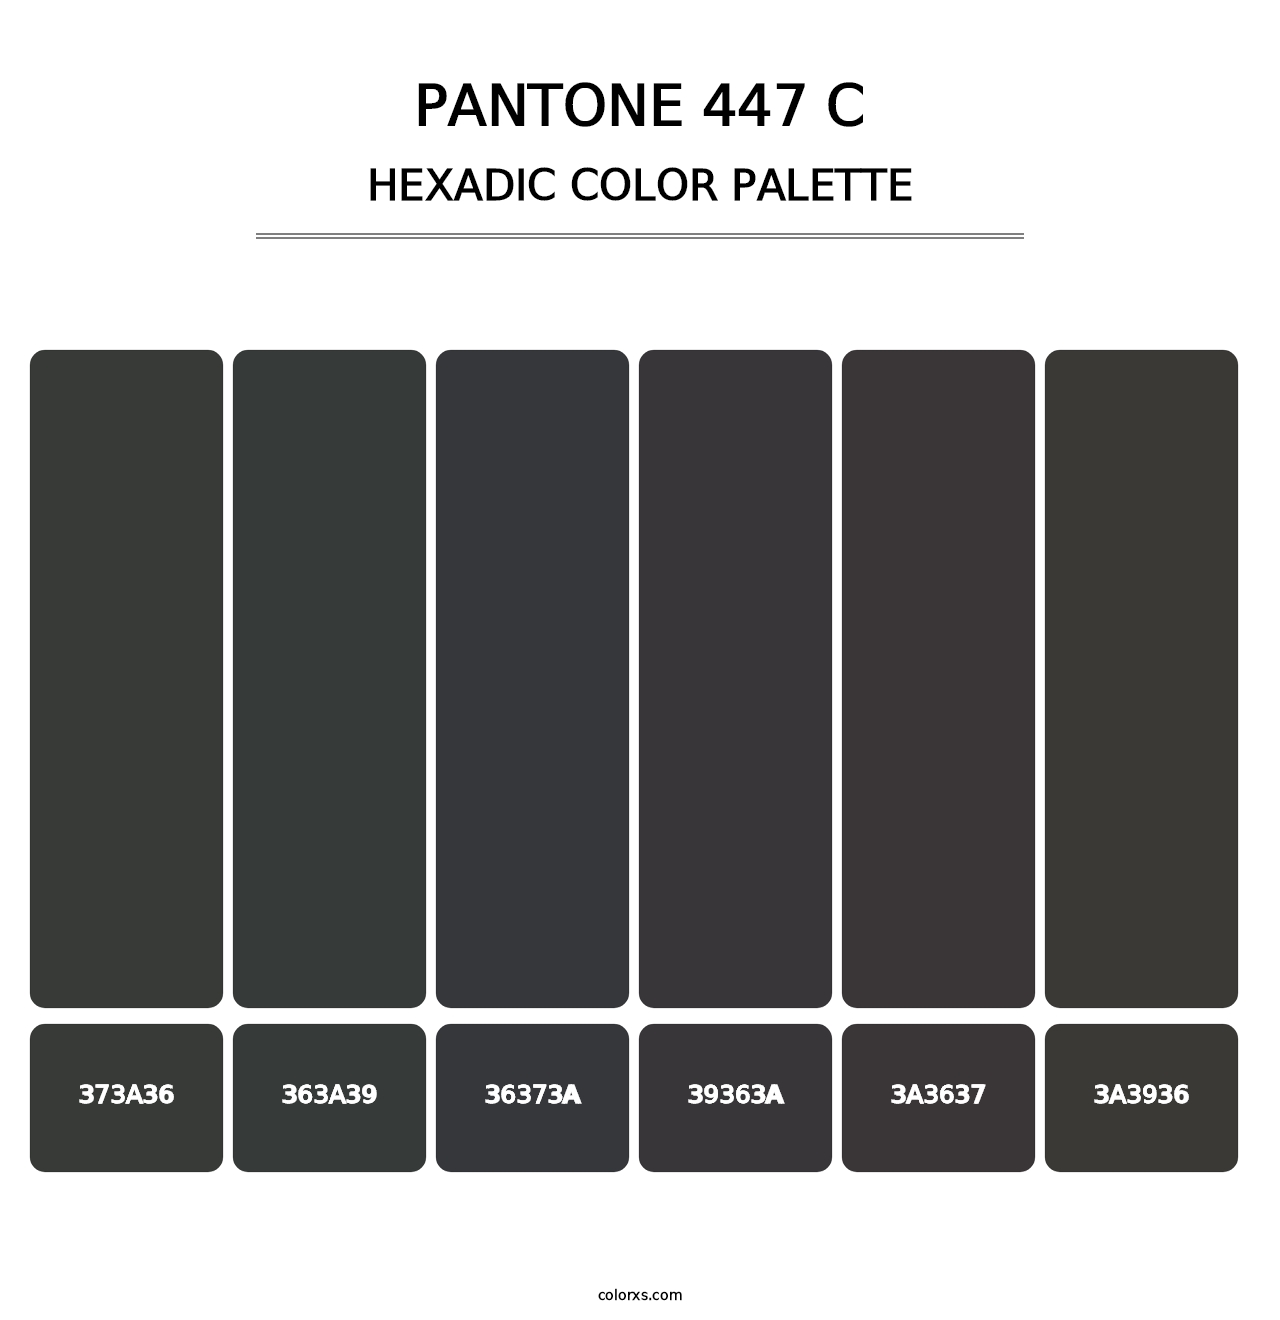 PANTONE 447 C - Hexadic Color Palette